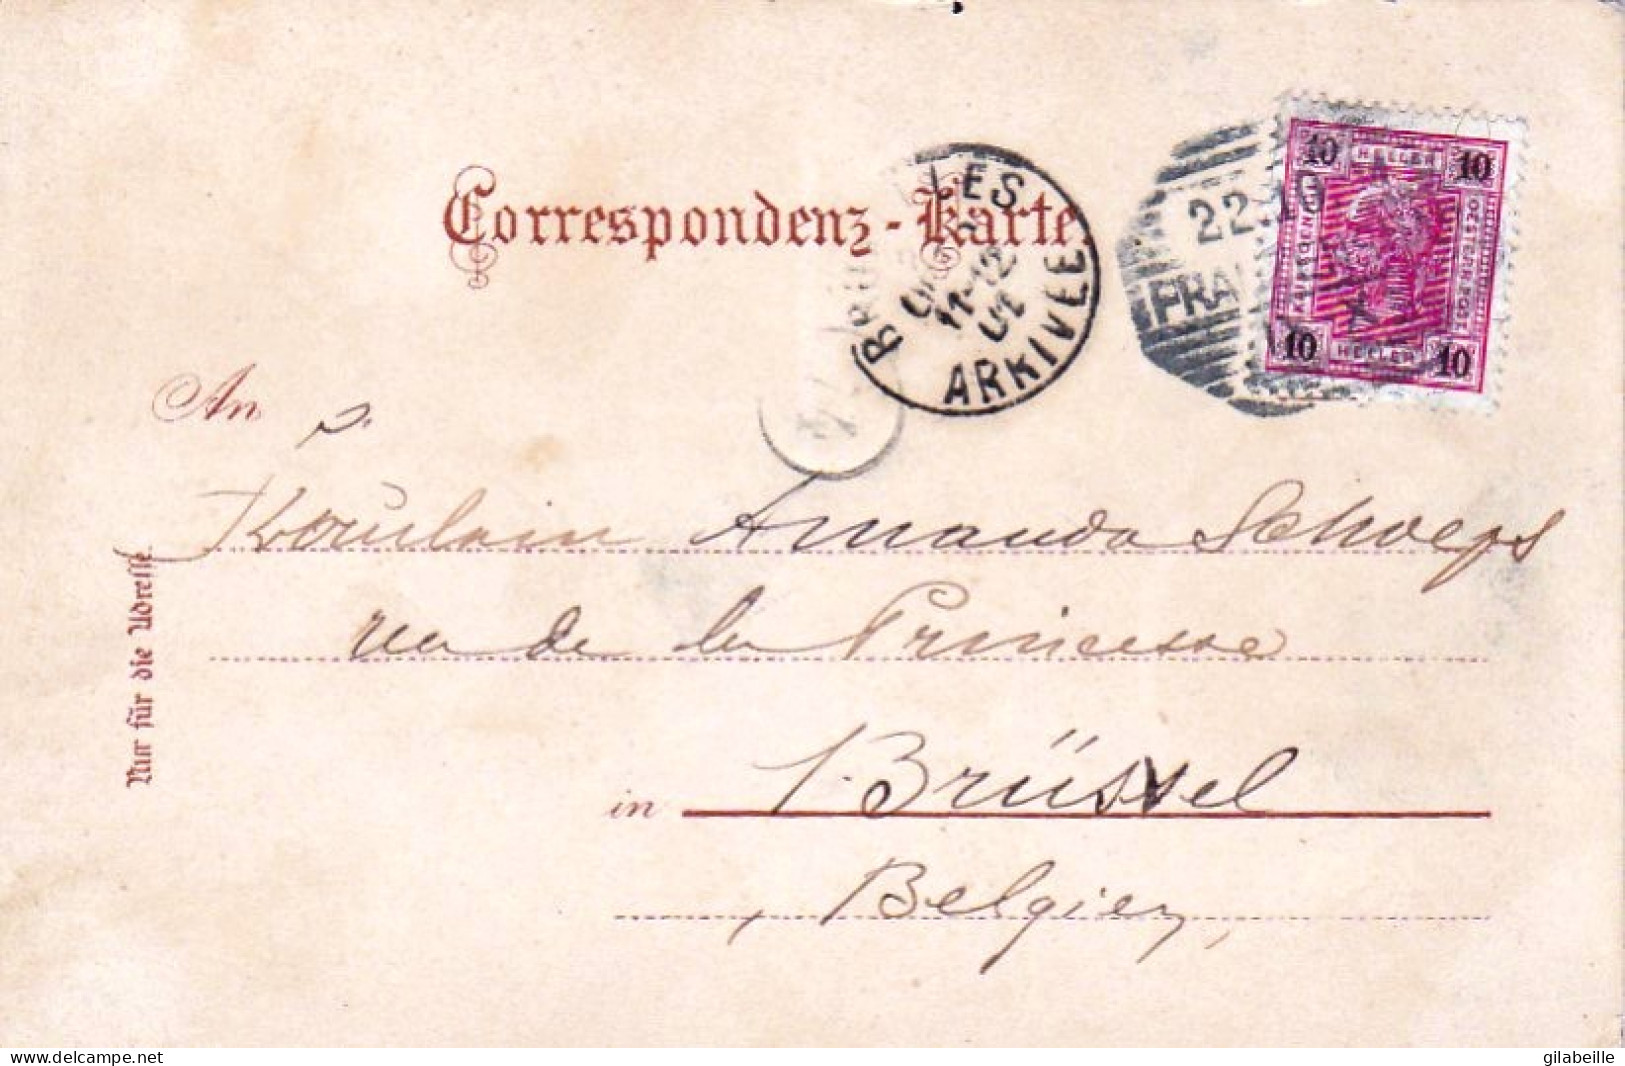 Gruss Aus FRANZENSBAD ( Františkovy Lázně ) Kaiserbad - Kaiserstrasse  - Litho 1901 - Tchéquie